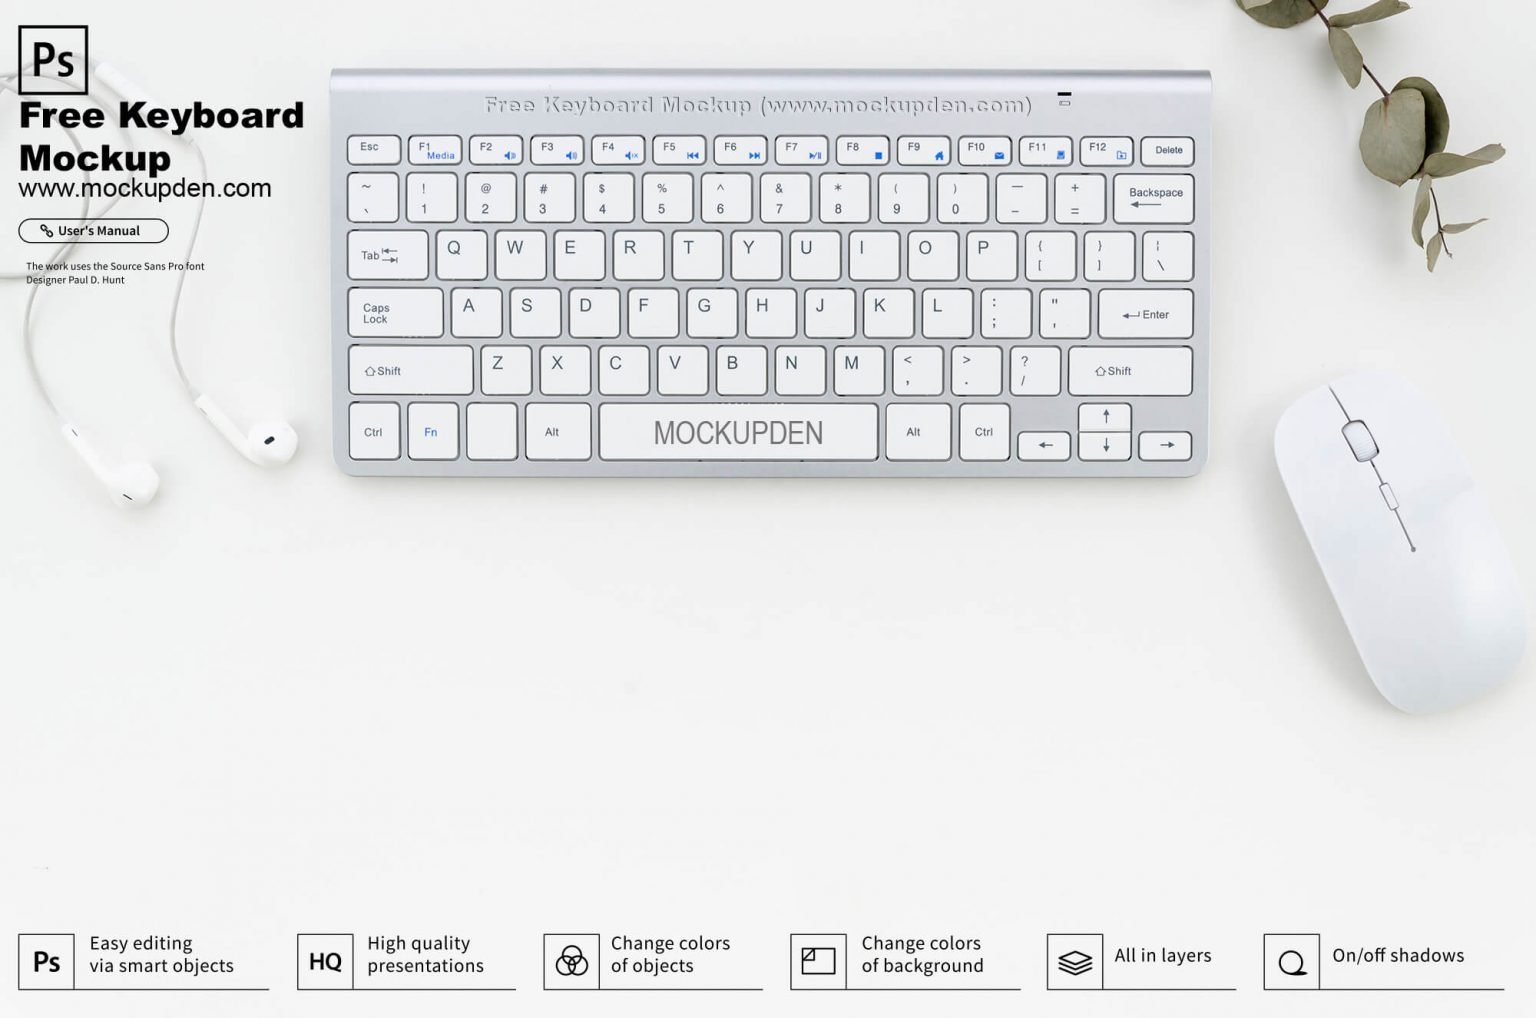 Download Free Keyboard Mockup PSD Template | Mockup Den